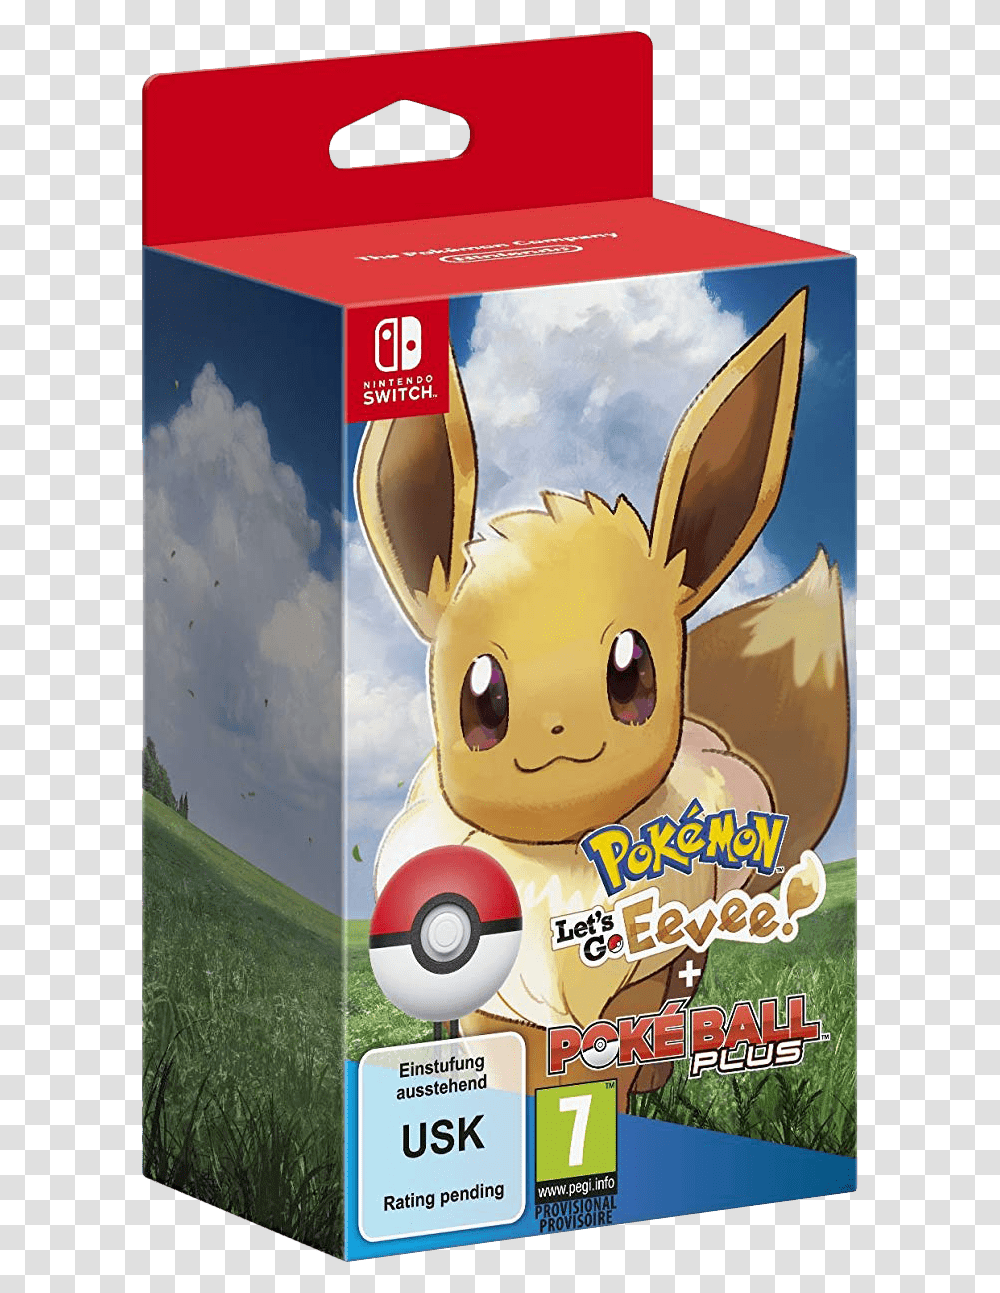 Pokemon Pokeball Pokemon Let's Go Eevee Pokeball Plus Pack, Advertisement, Label, Poster Transparent Png